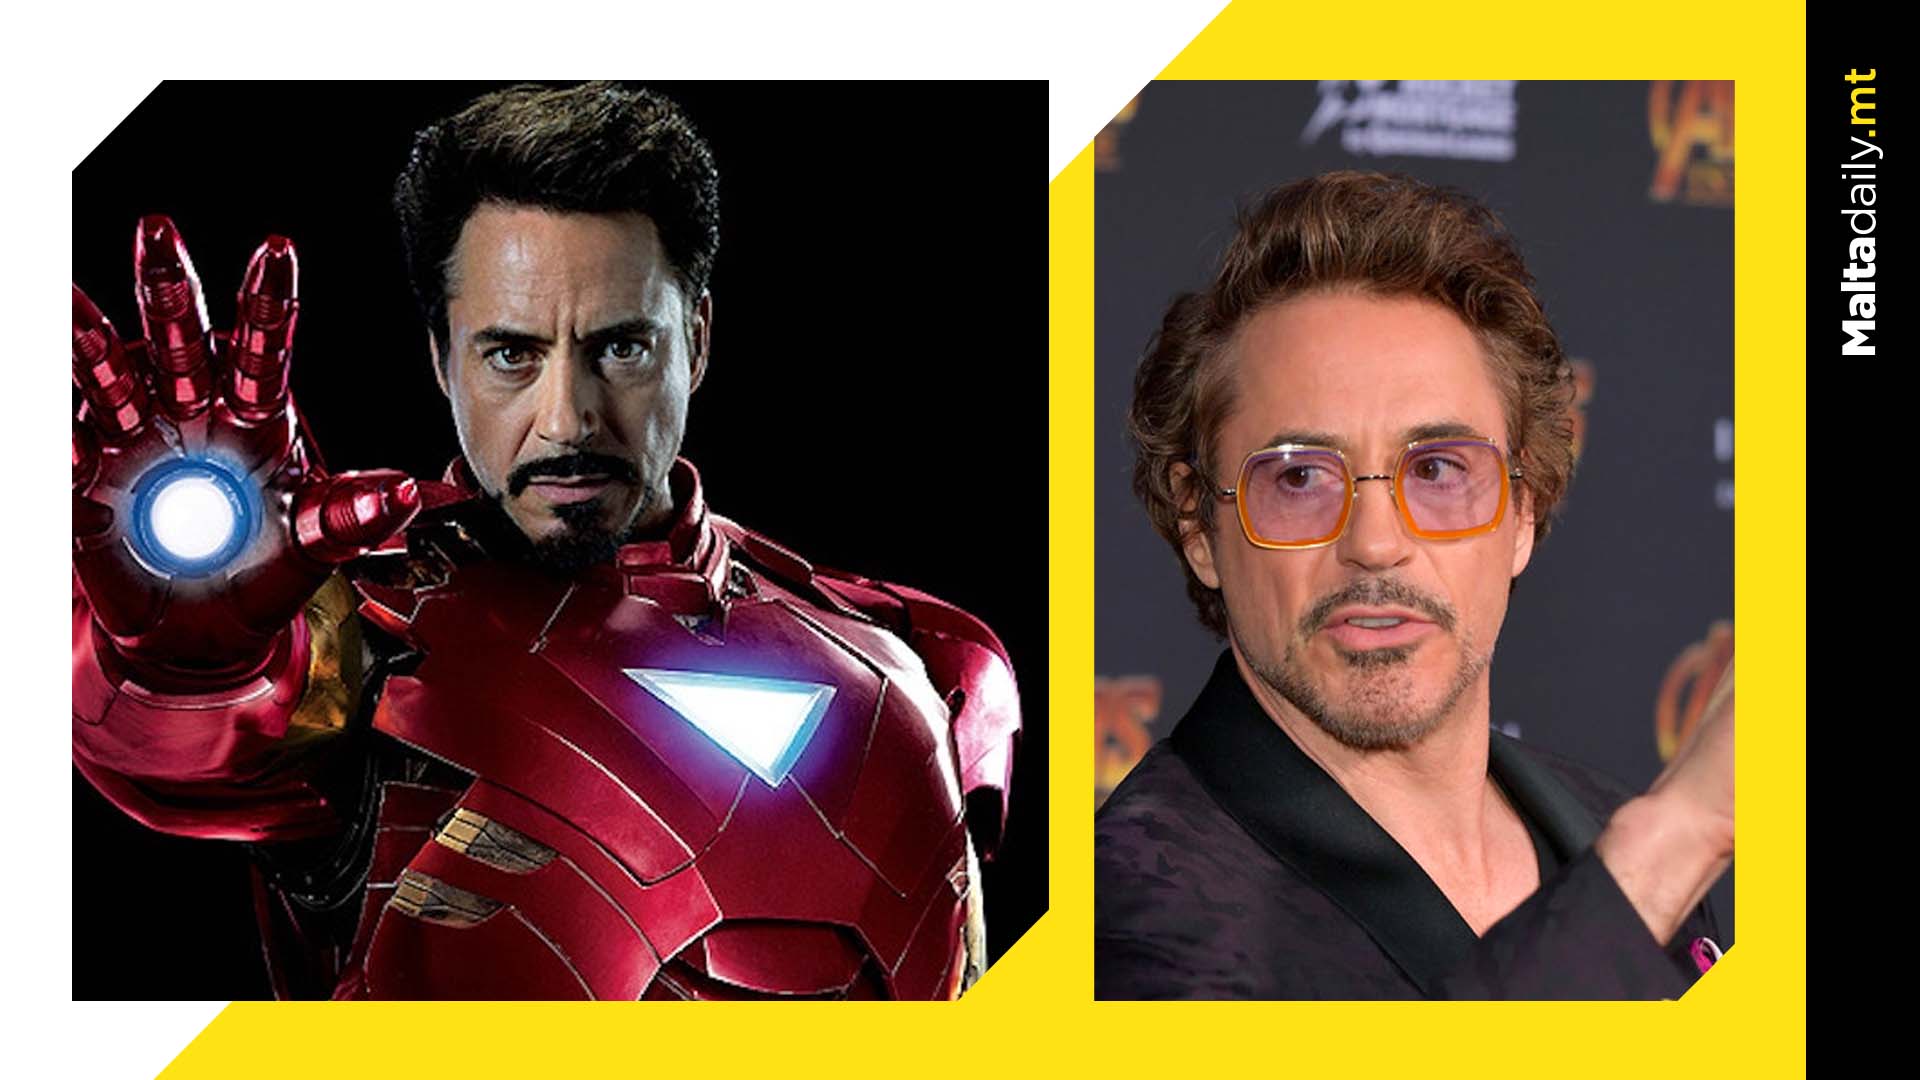 Robert Downey Jr earned over $435 million through MCU